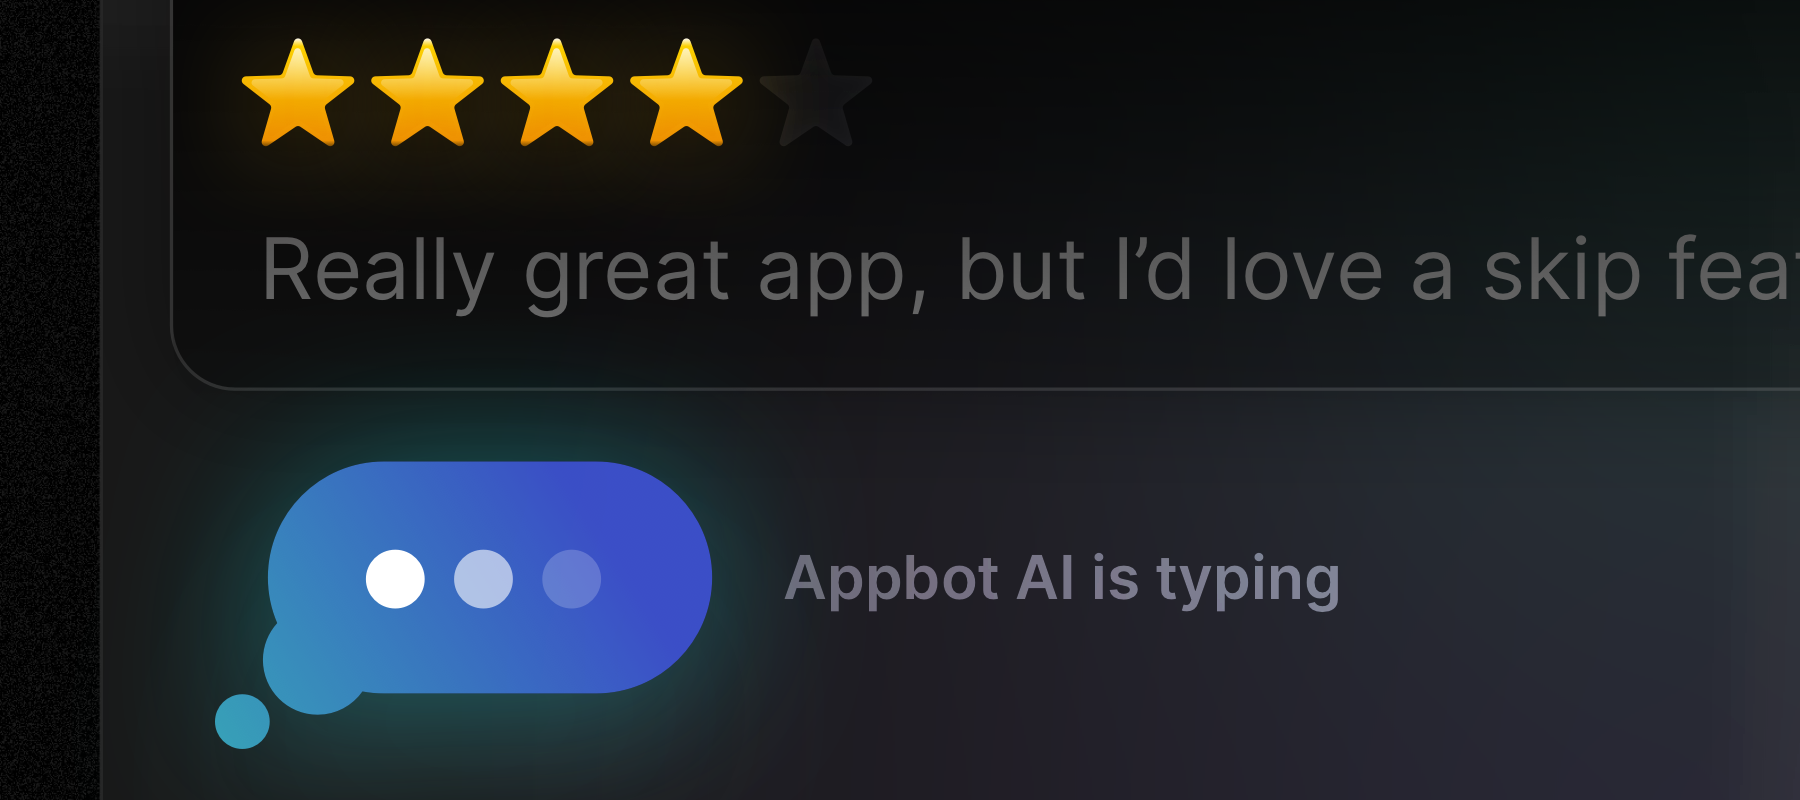 Auto Reply to App Reviews